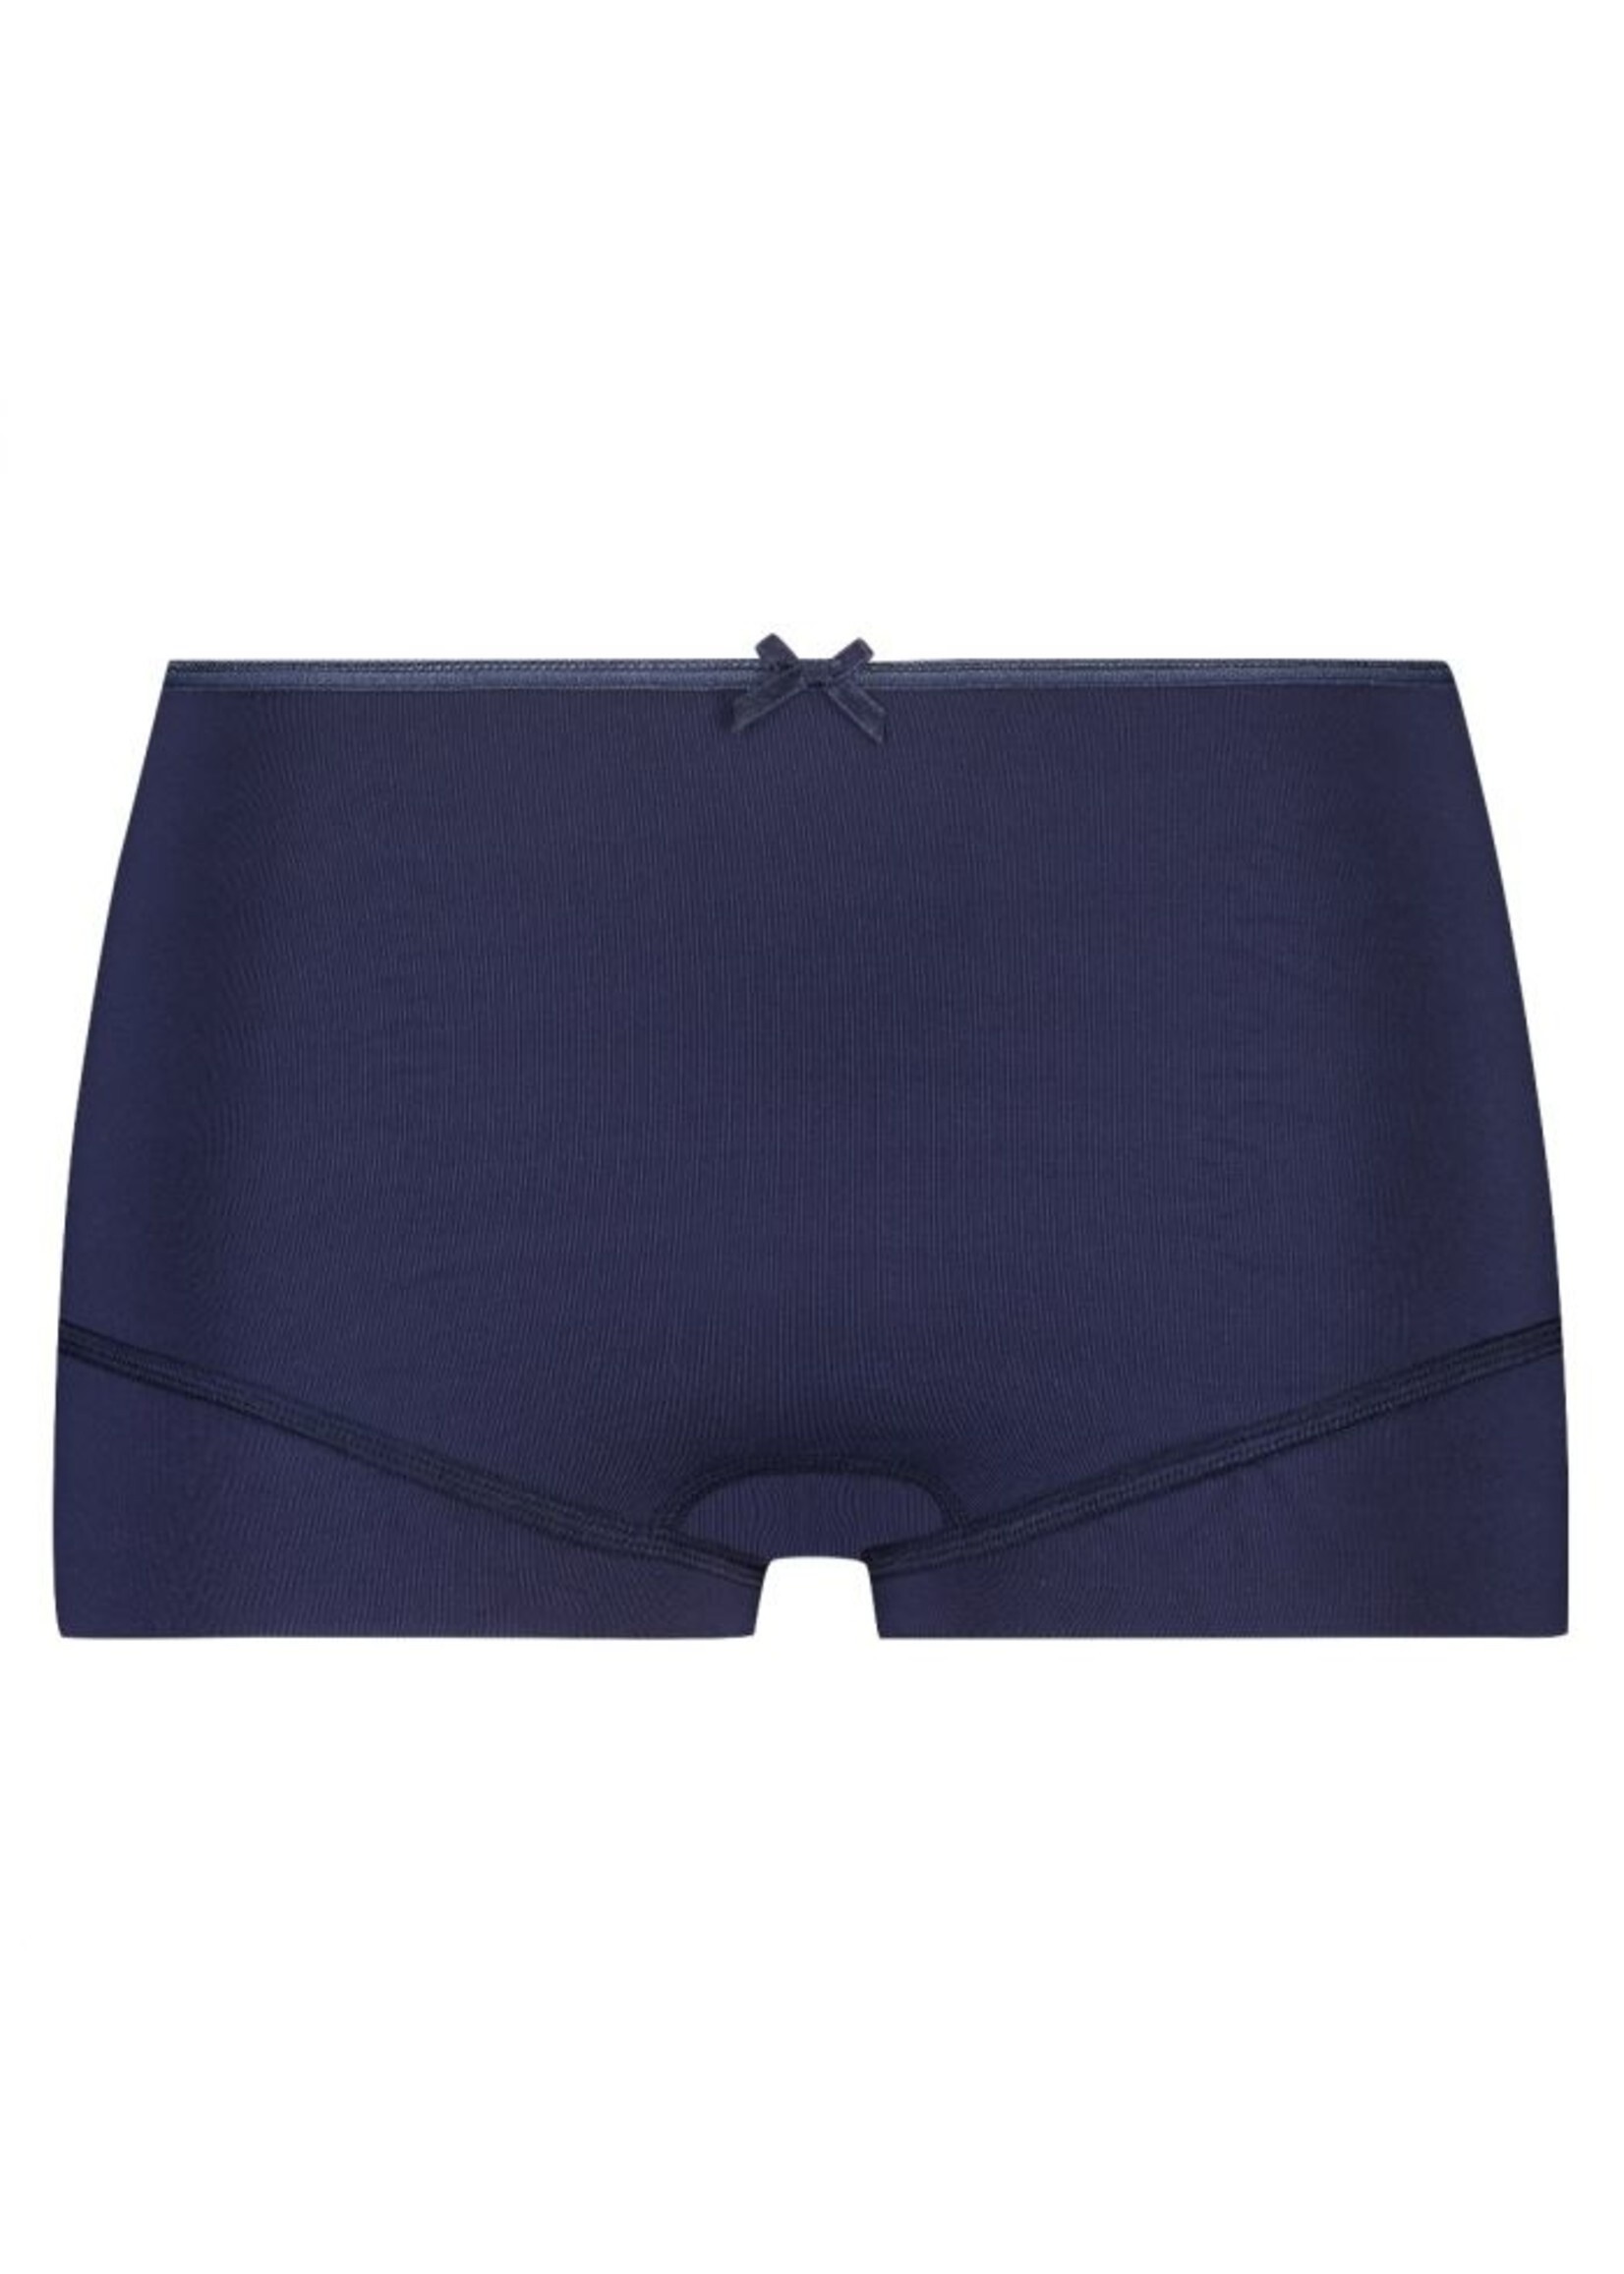 RJ underwear Short donker blauw